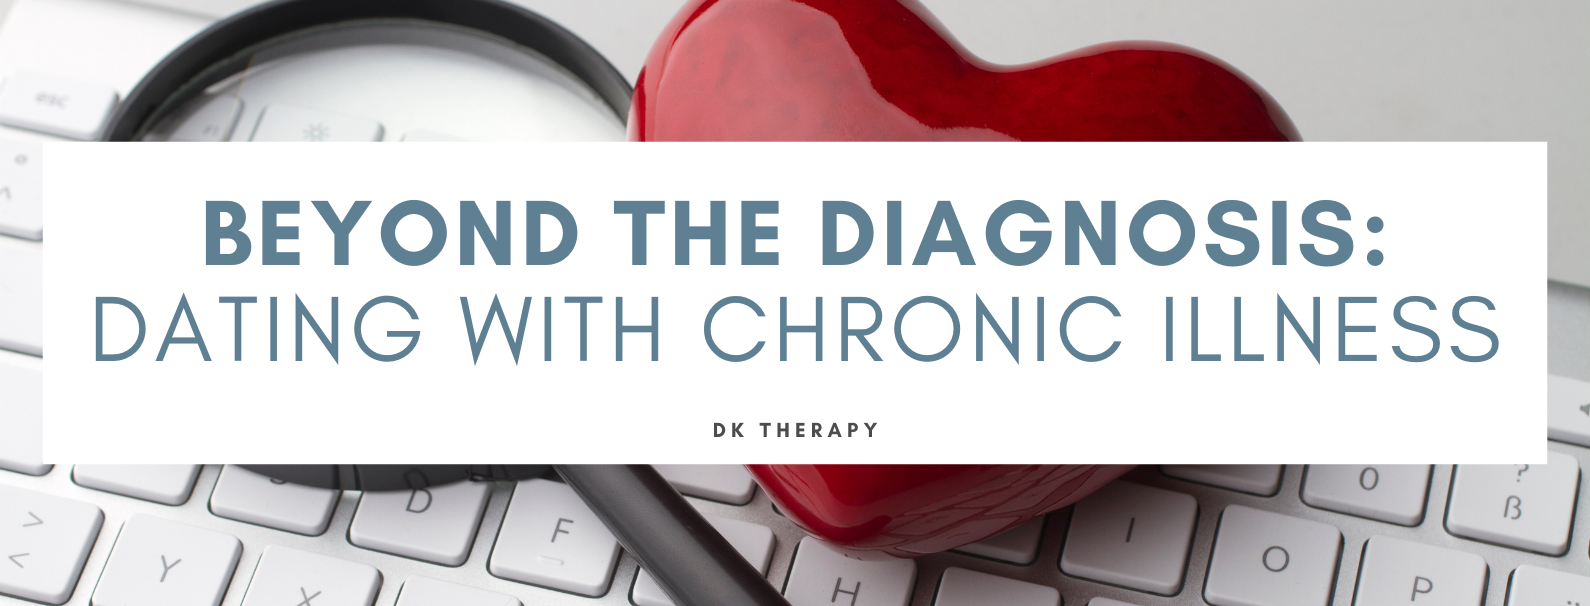 Beyond the Diagnosis: Dating with Chronic Illness